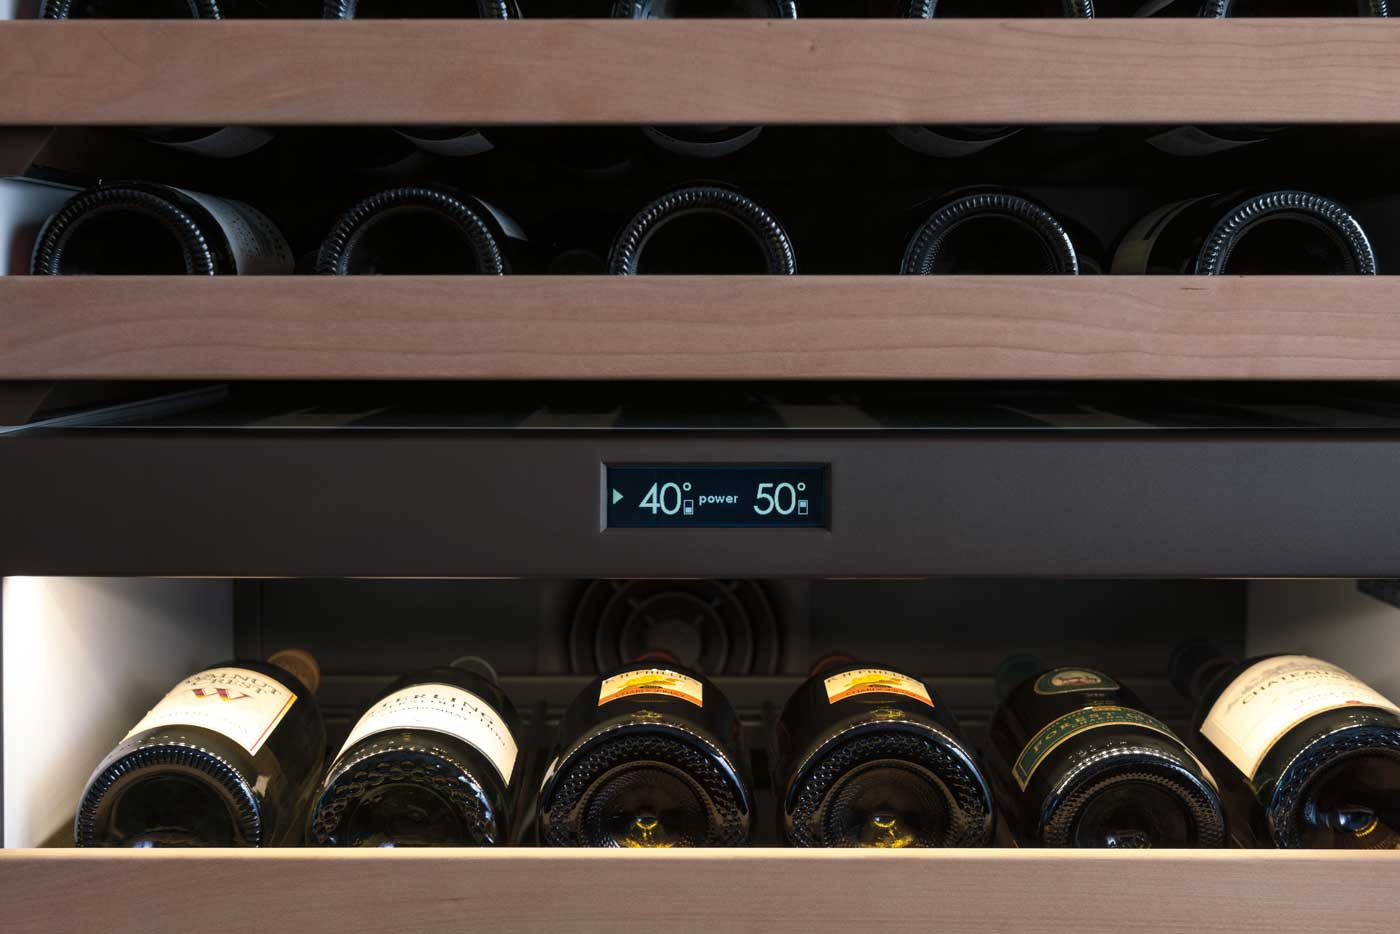 Wine bottles in wine refrigerator